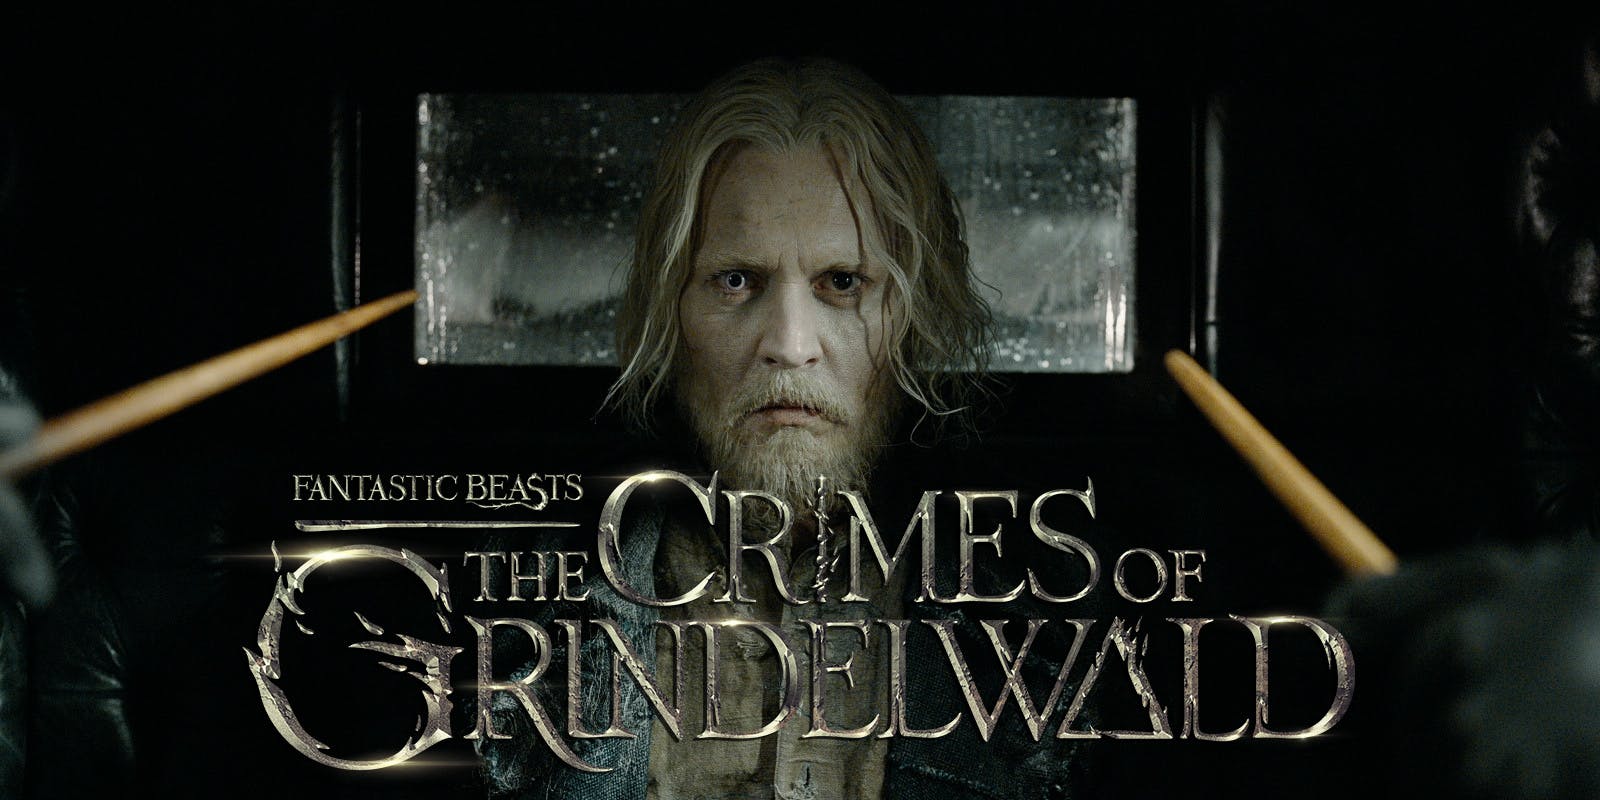 Sinister Facts About Harry Potter's Gellert Grindelwald